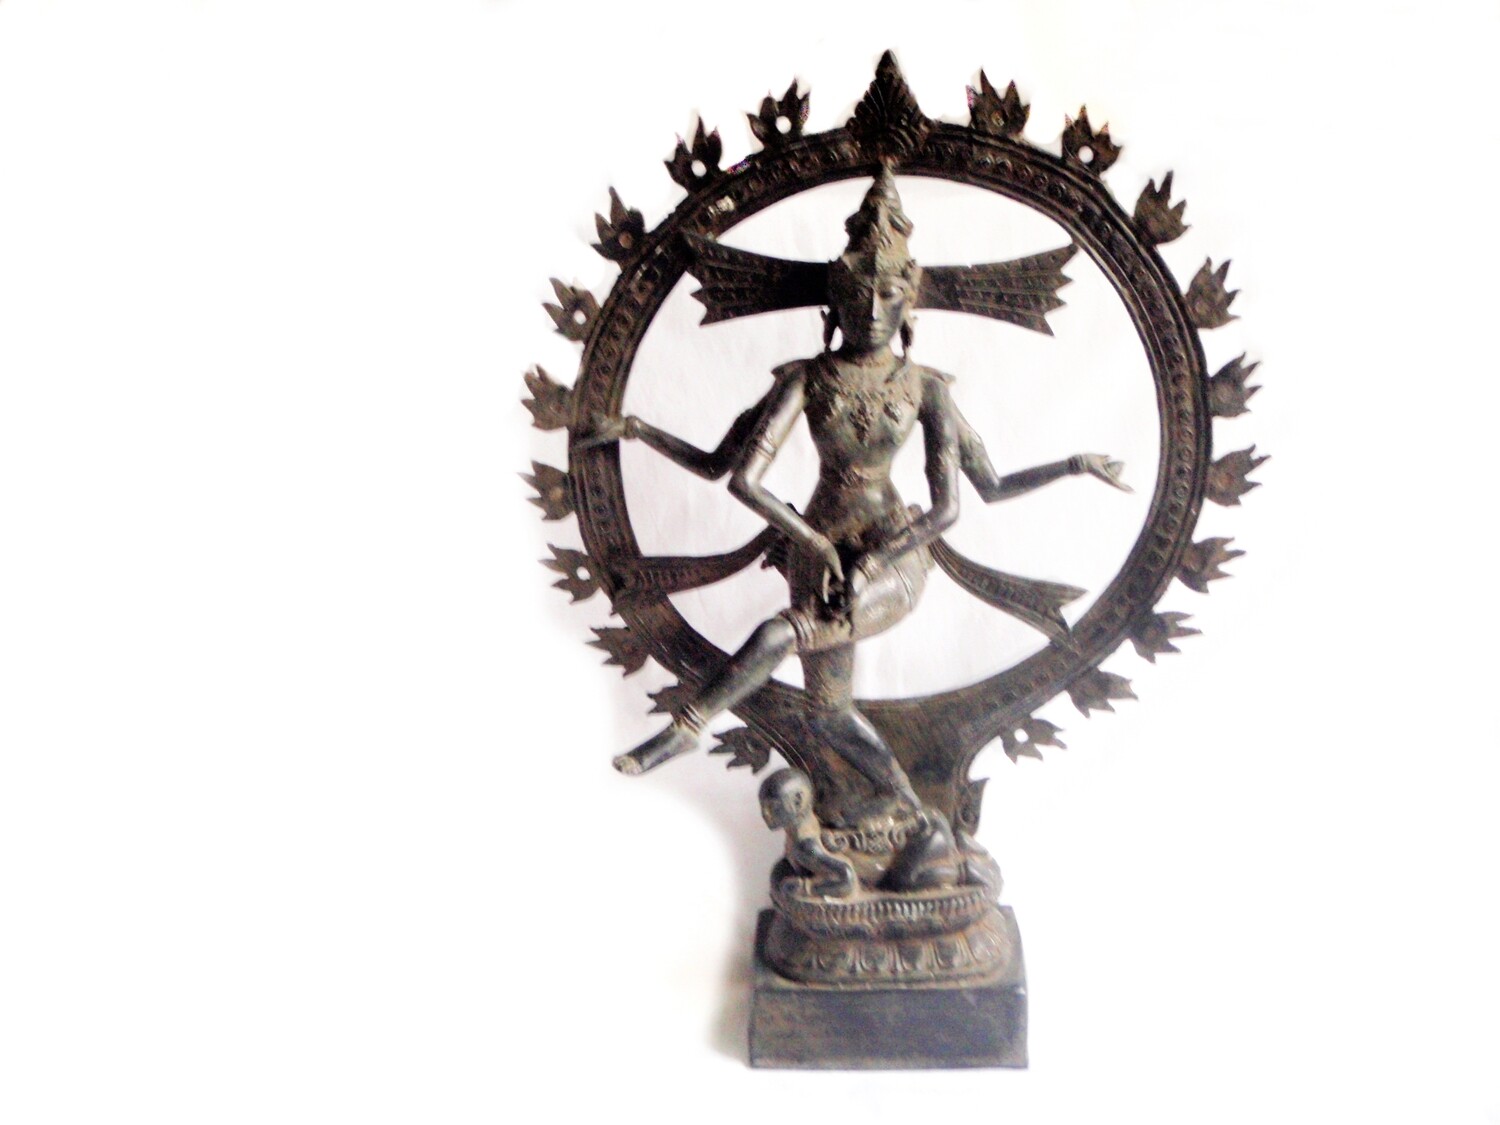 Shiva Nataraja Lord of the Dance Statue 23 Inch Hindu God Cosmic Dancer